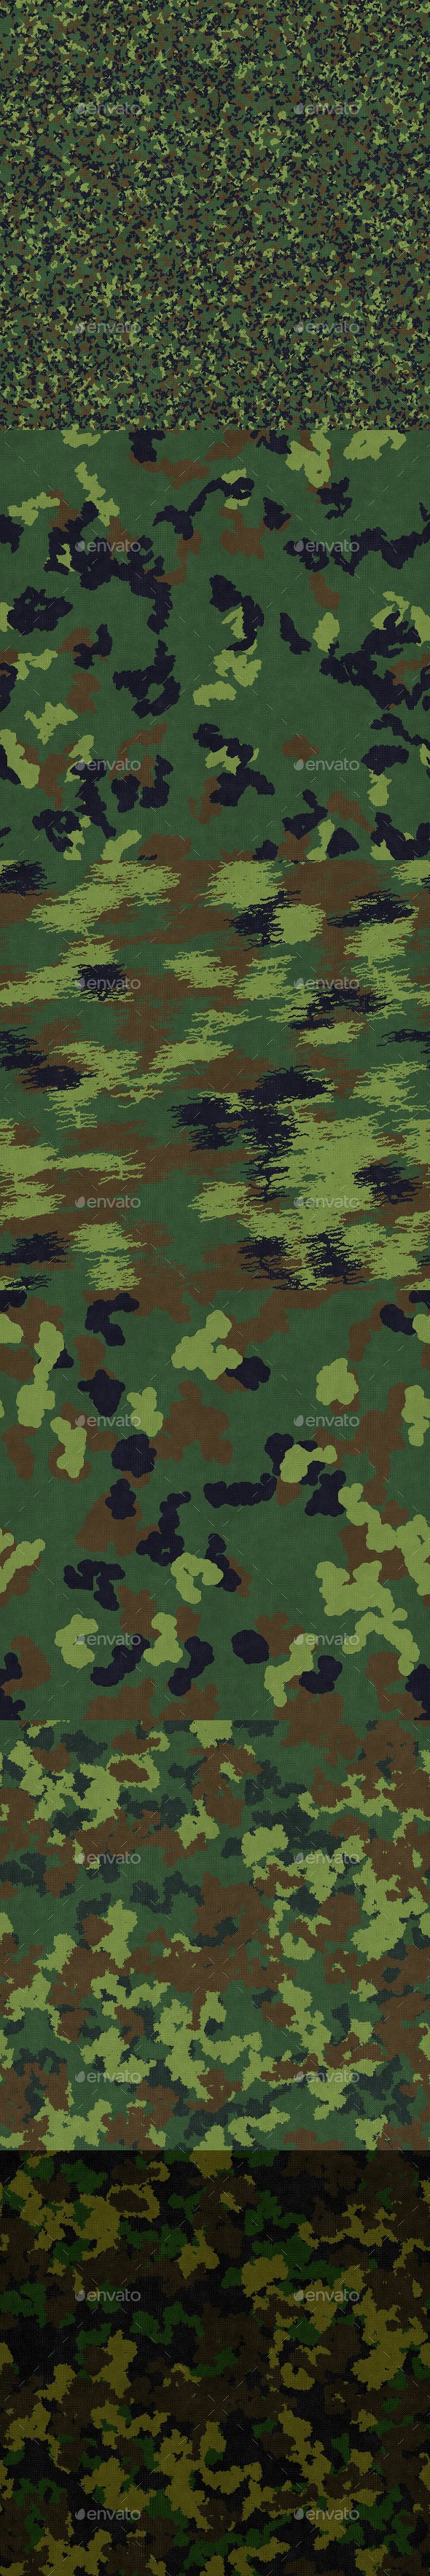 Camouflage textures